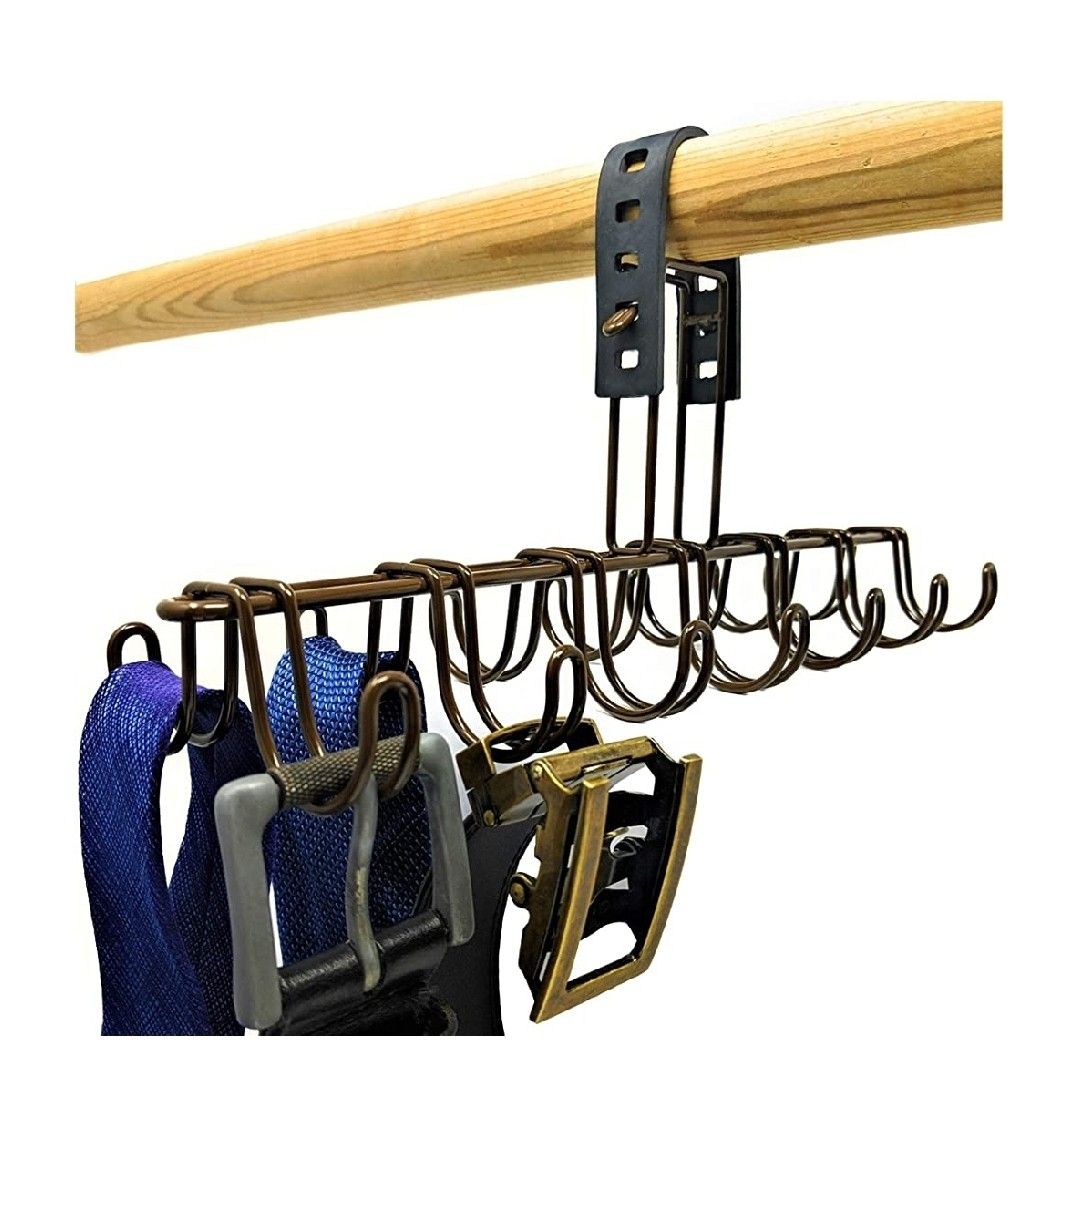 StrapGrip Hanger/Holder/Organizer/Rack for Belts, Ties, or Scarves in Closet